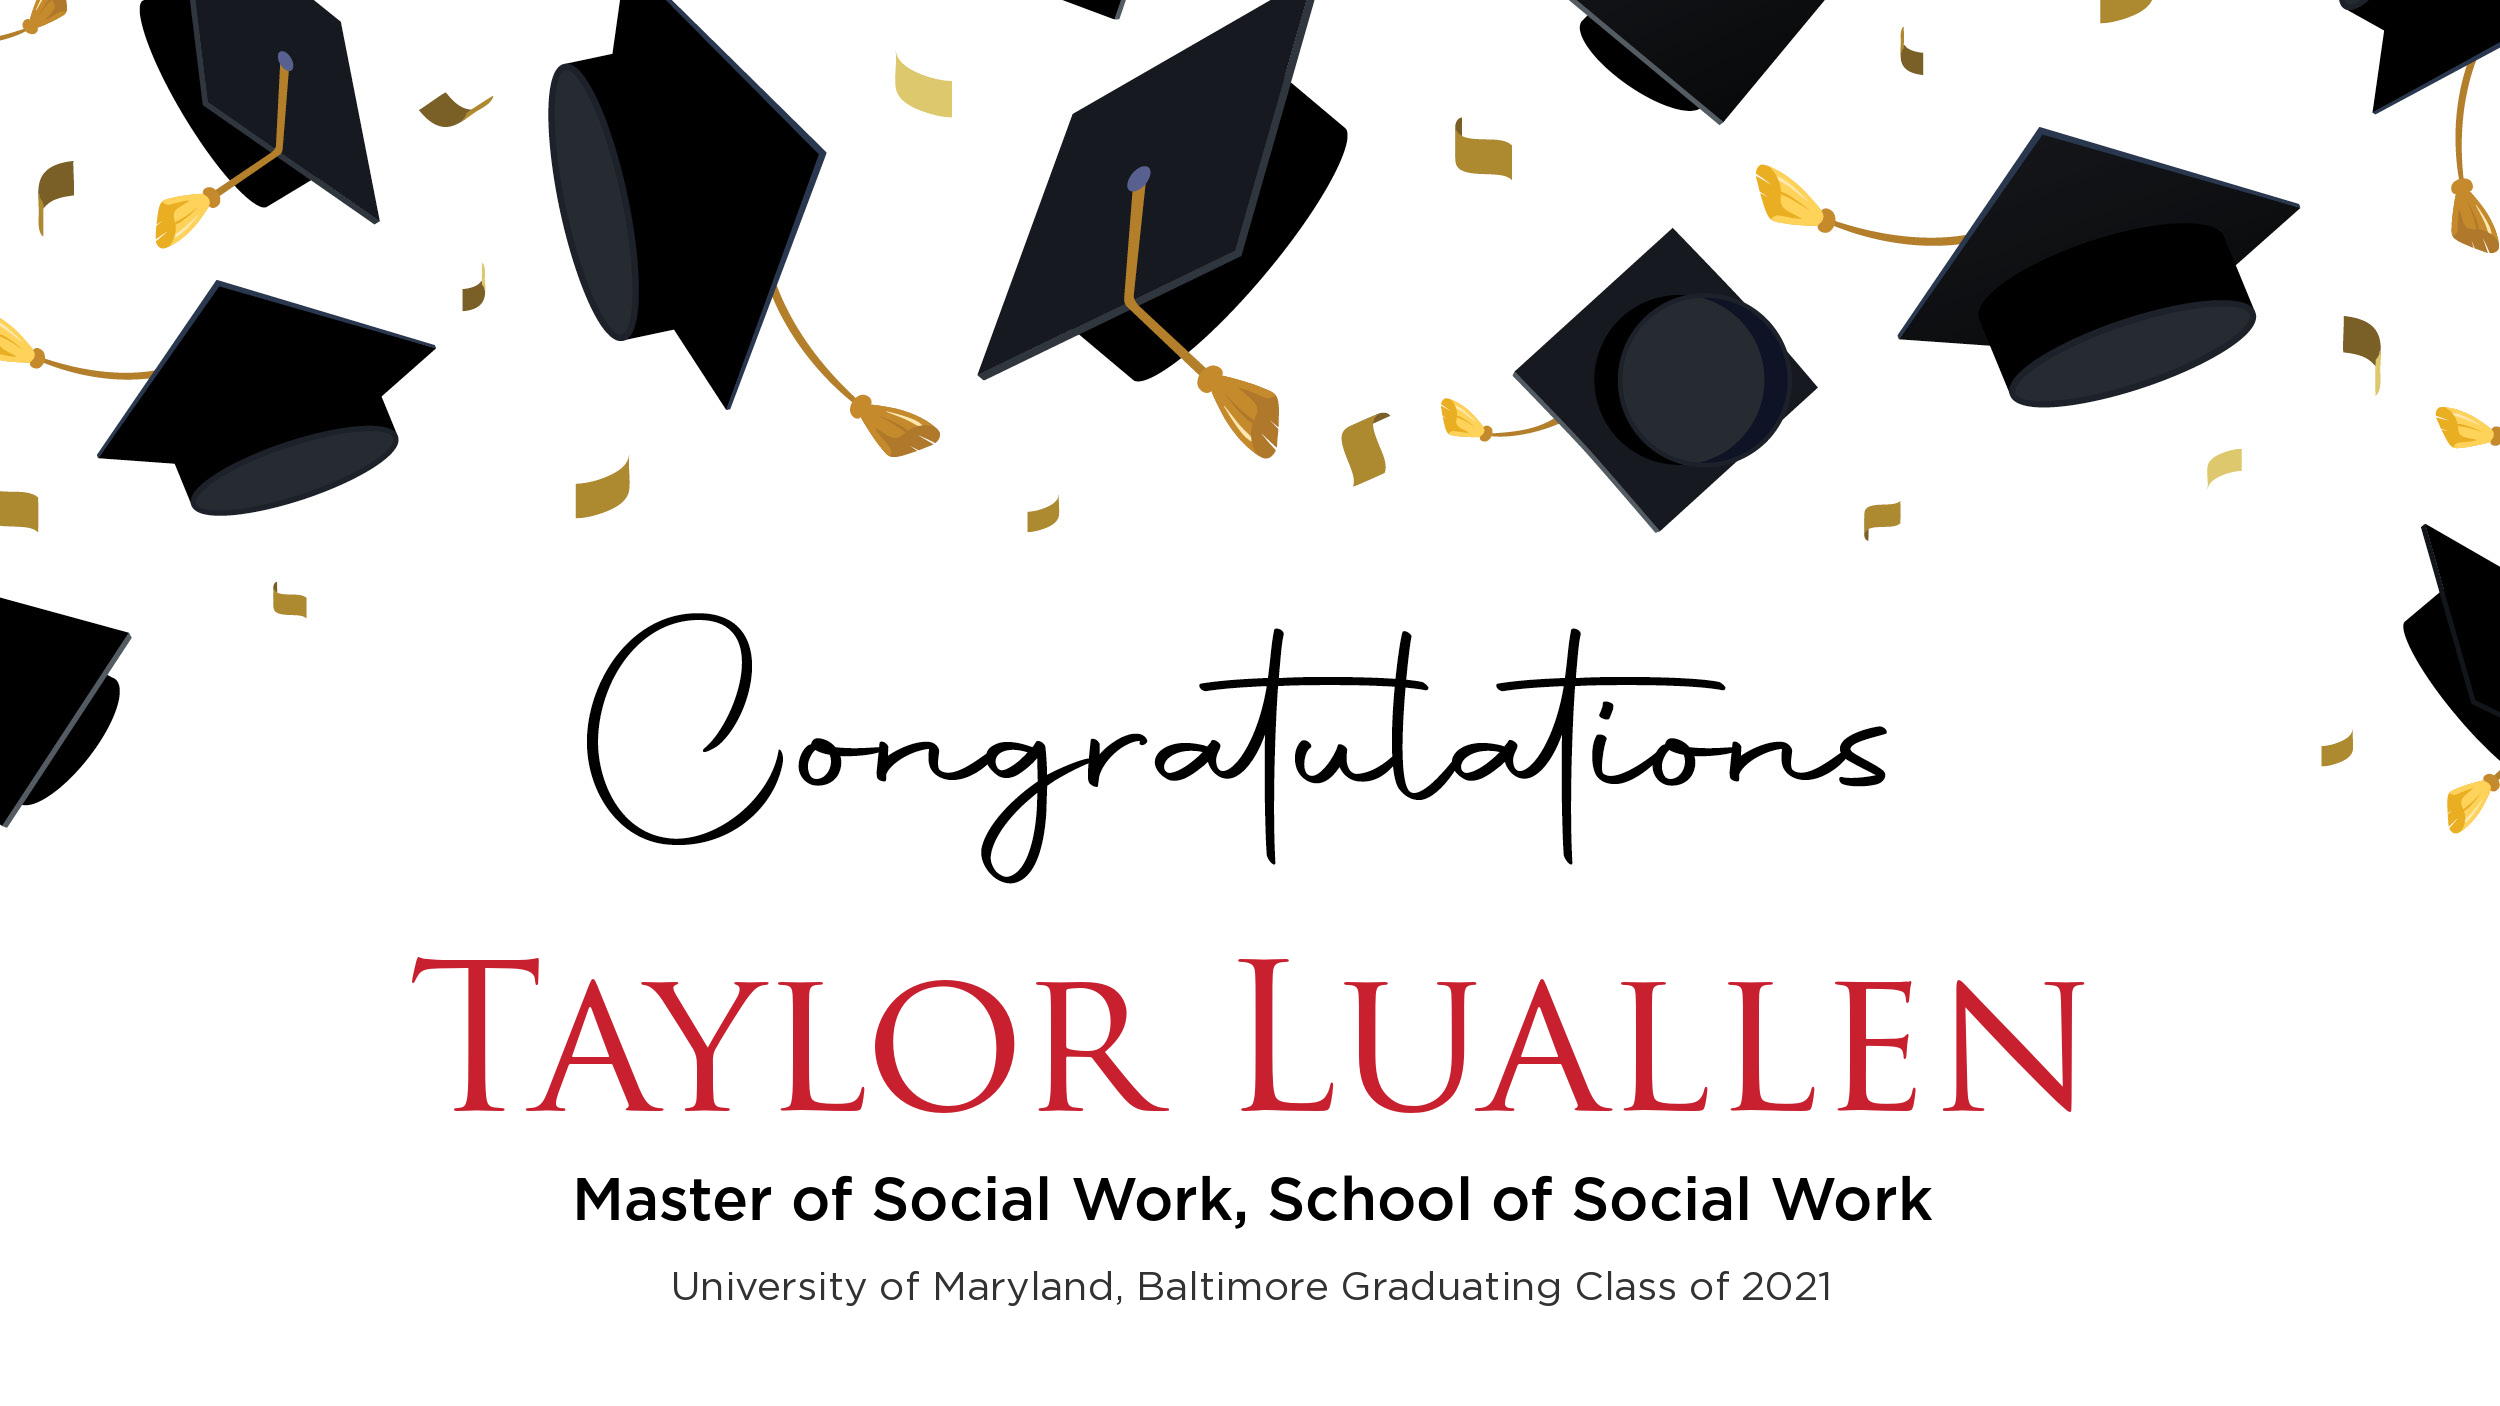 Congratulations Taylor Luallen, Master of Social Work